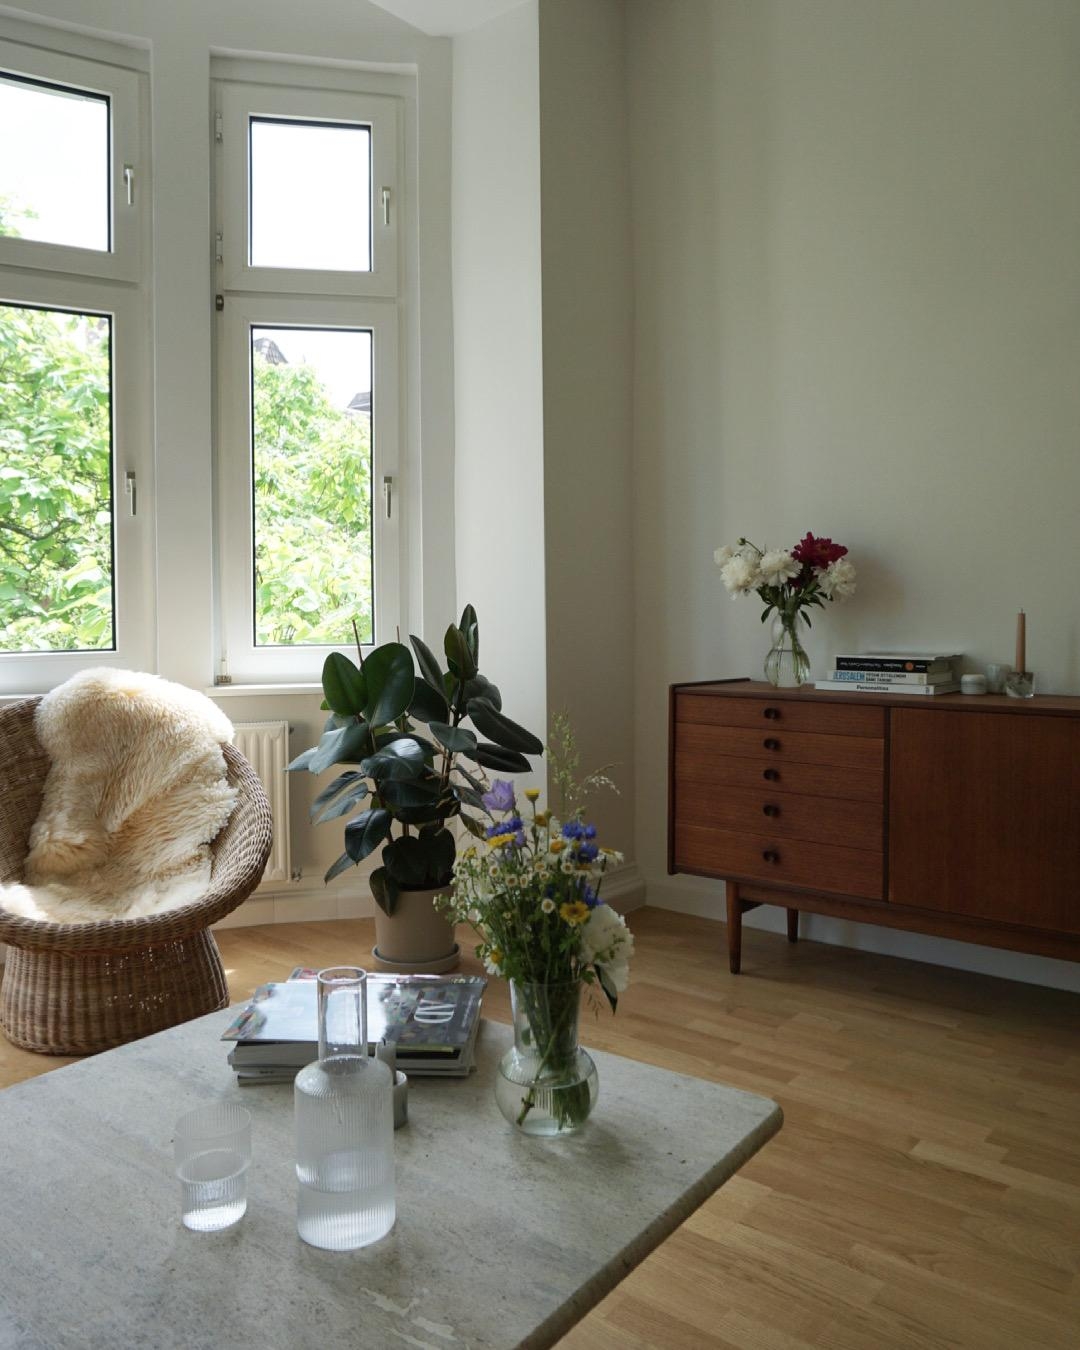 Wohnzimmereck #livingroom #midcentury #interior #flowers #plants #cozyhome #nordichome #mylvgrm